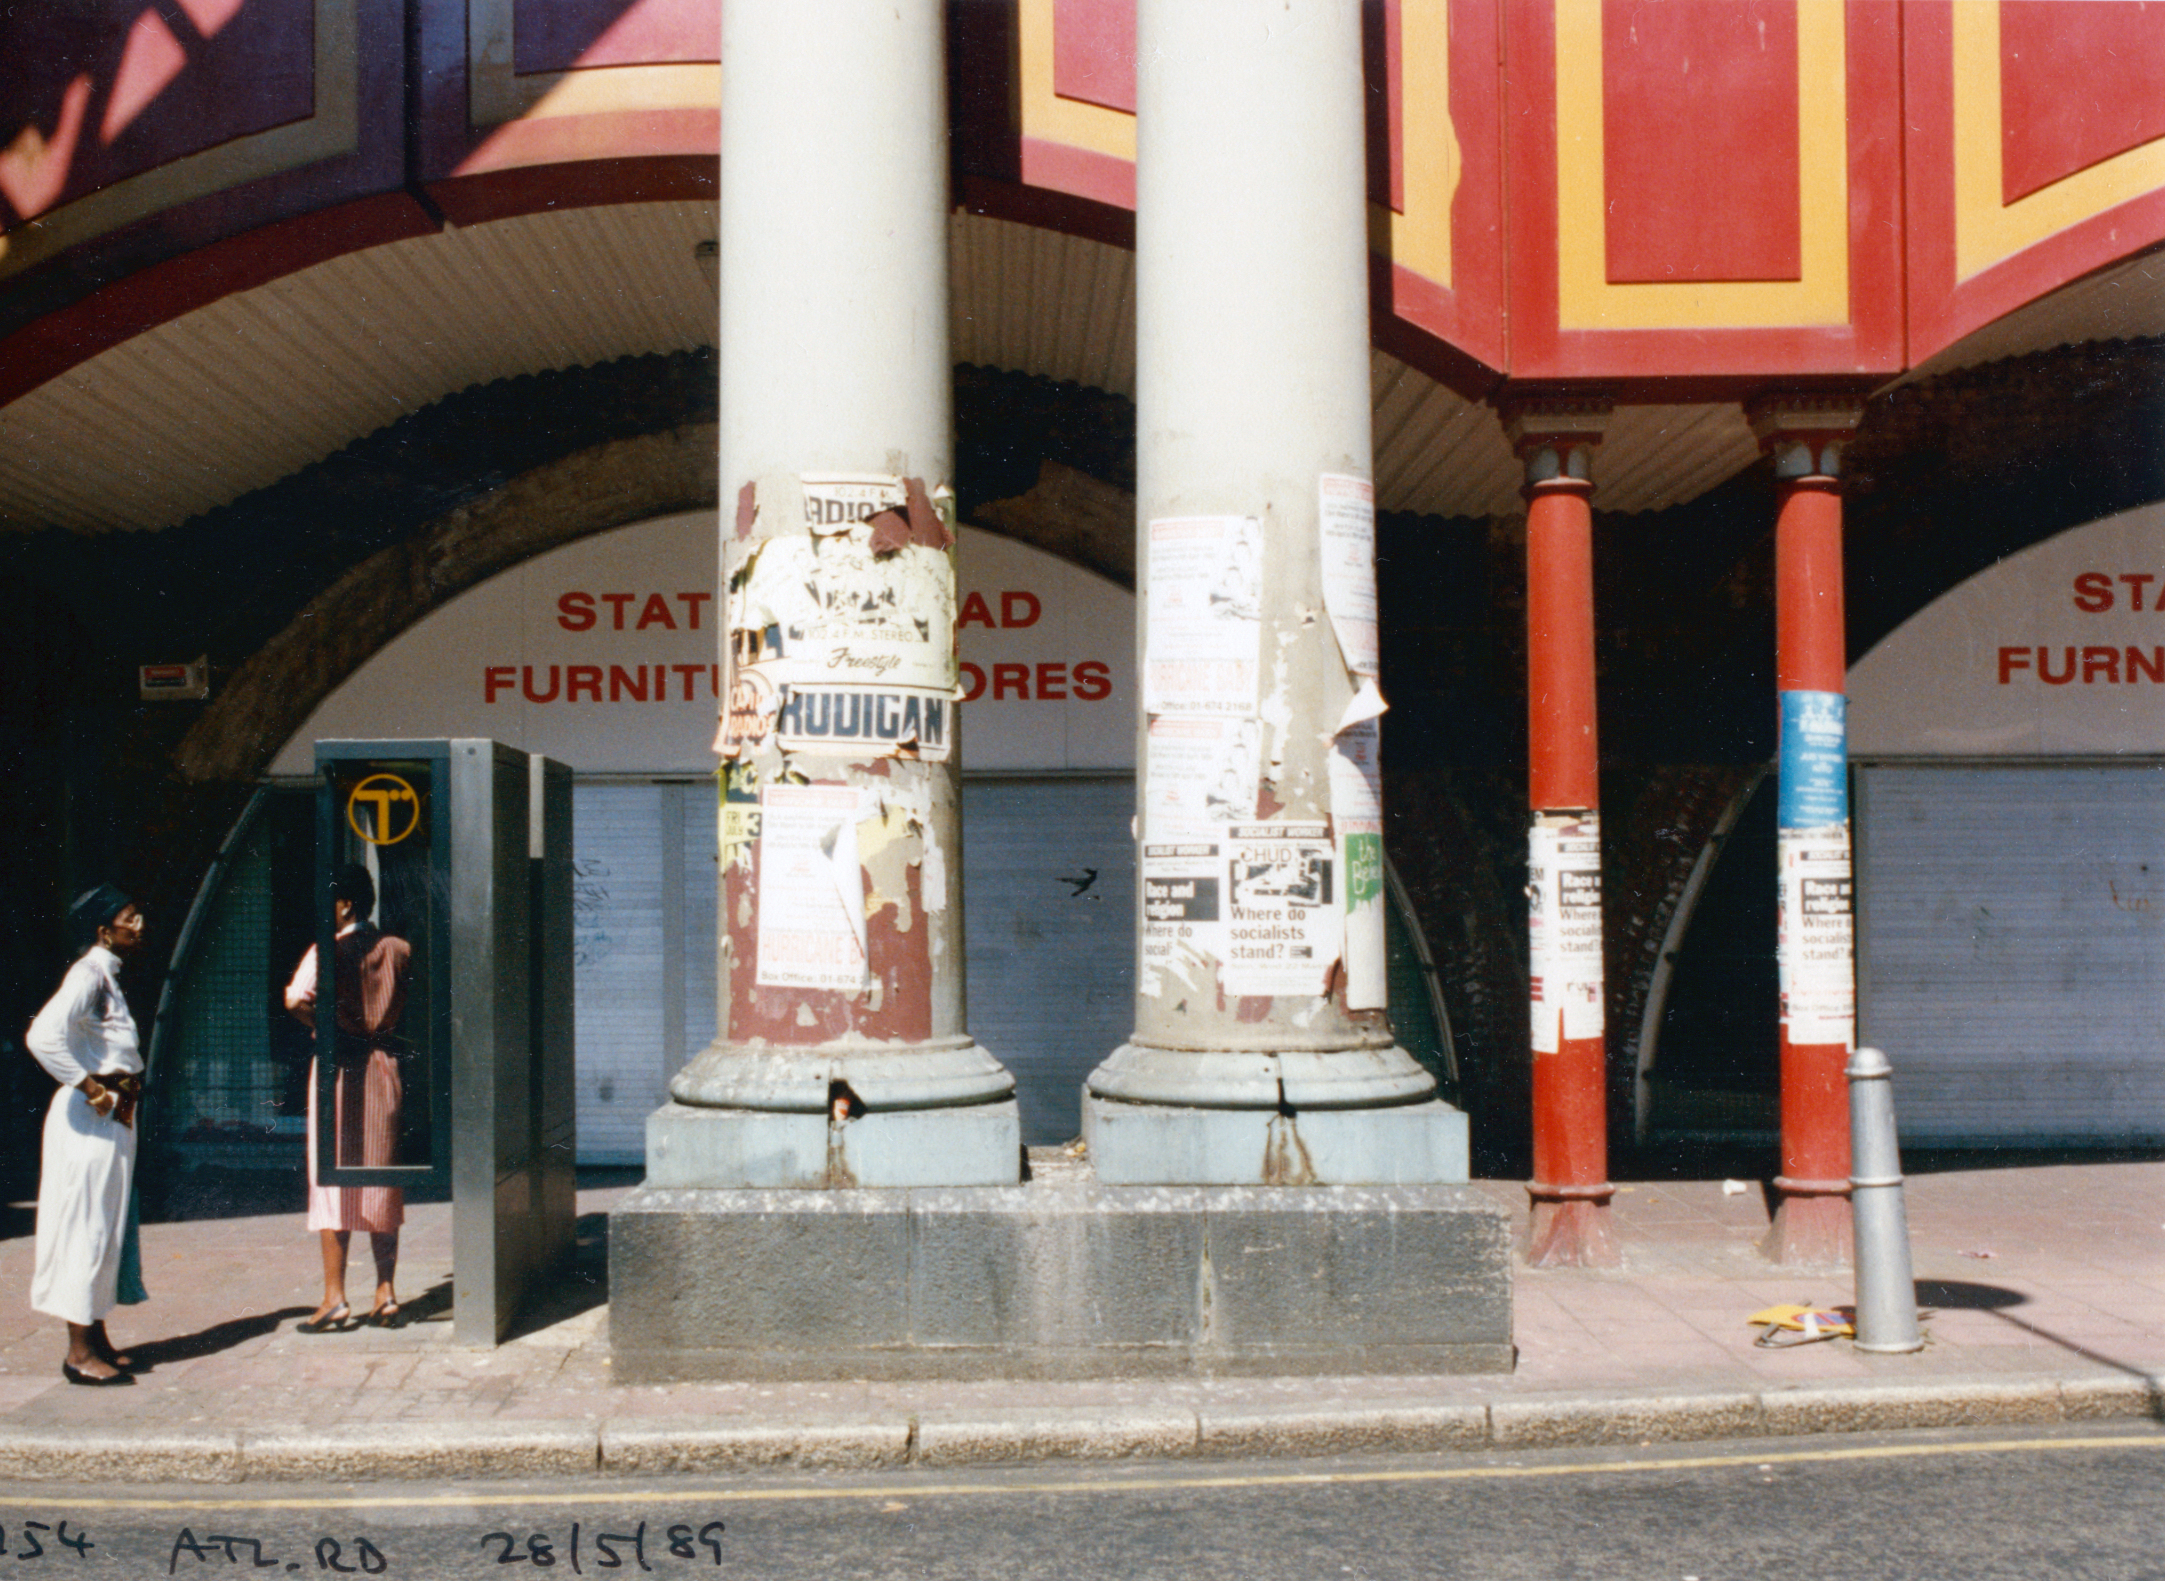 Railway arches, bridge piers, Atlantic Rd, Brixton, 1989, Lambeth